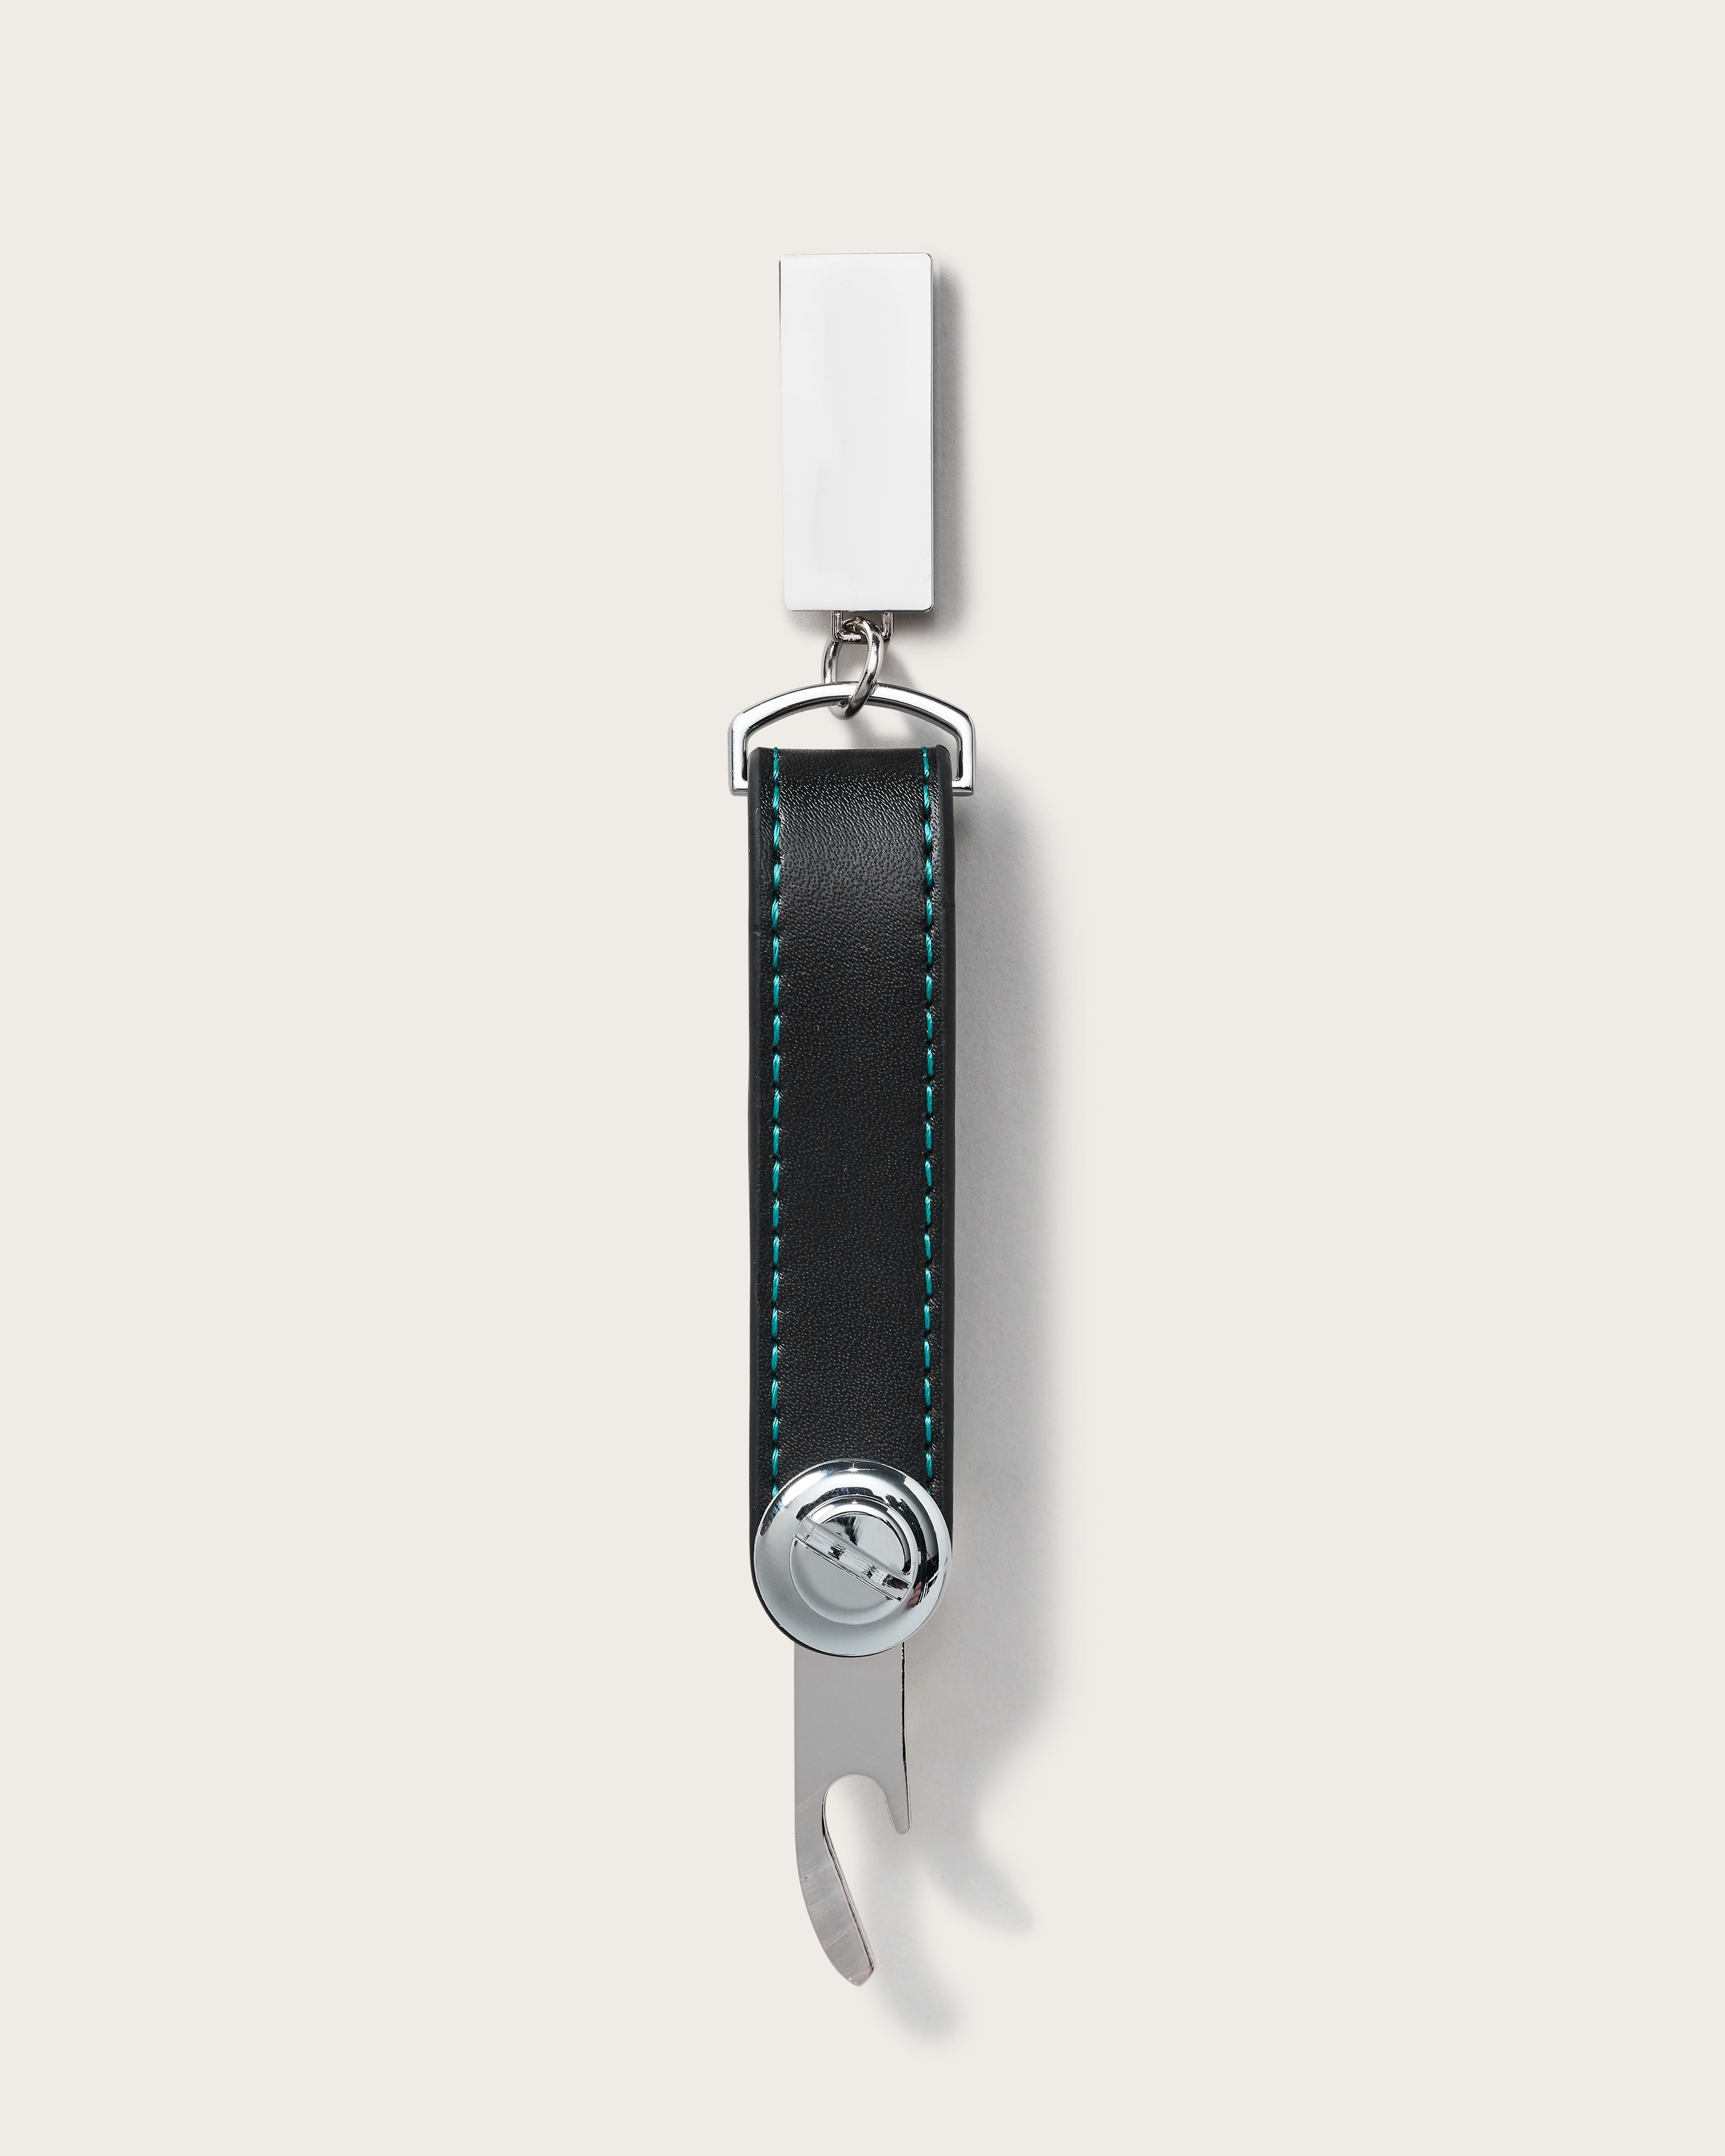 Mercedes Benz LED acrylic Keyring keychain- Any car make  logo-Audi-BMW-Ford-Honda-Fiat-Merc-rechargeable light-USB-Gift gadget  accessories